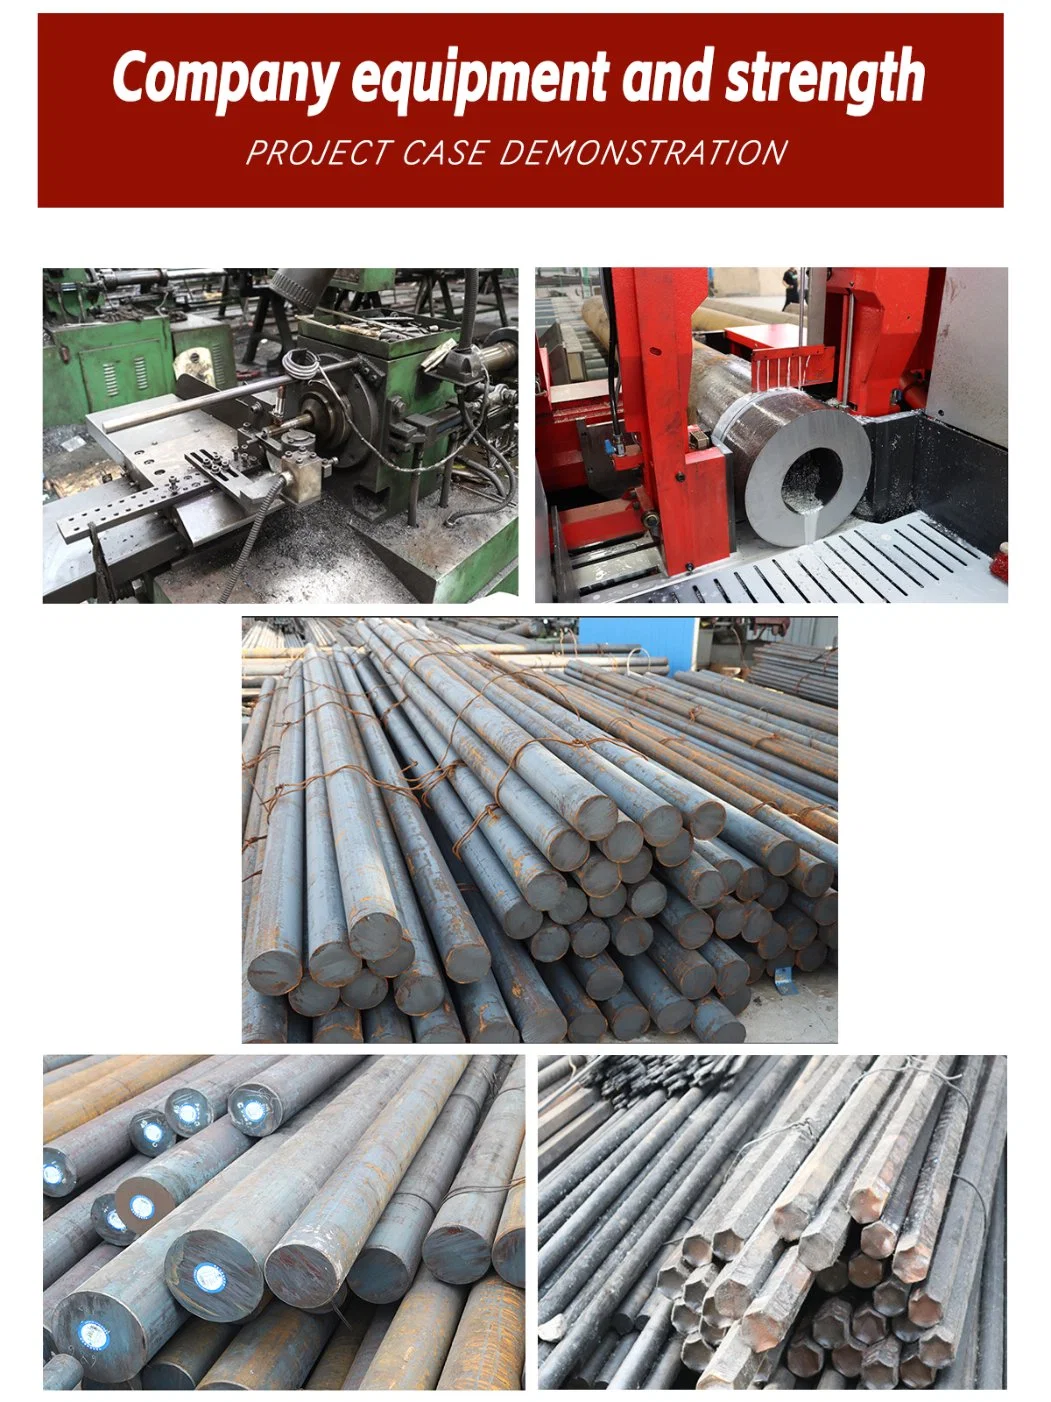 AISI Carbon Alloy Steel Round Bars S45c 1045 S20c 1020